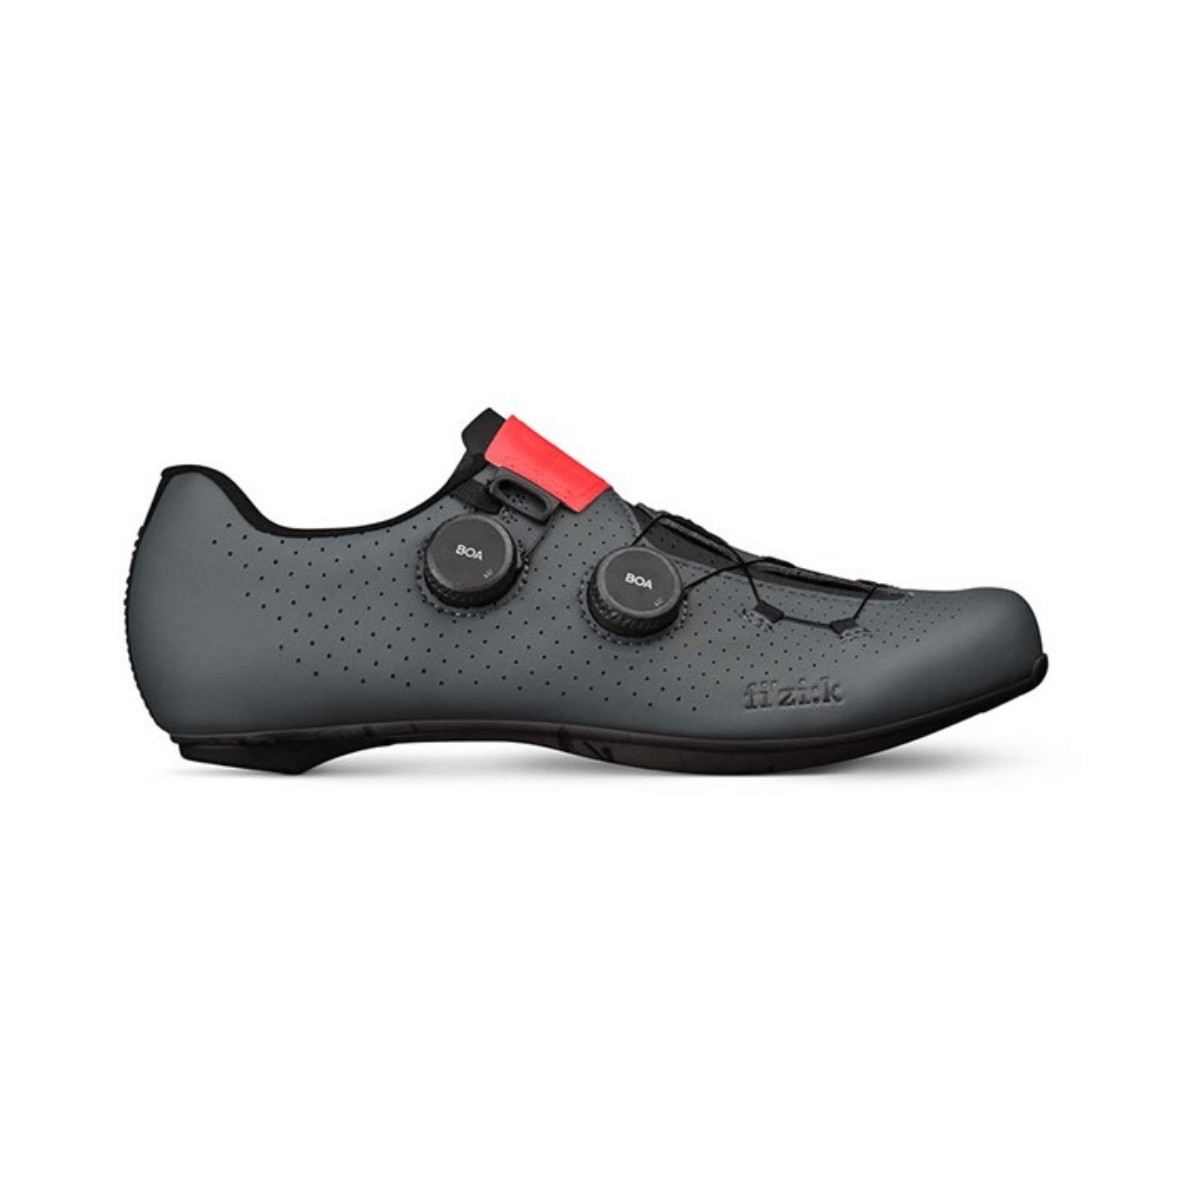 Shoes Fizik Vento Infinito Carbon 2 Grey Coral, Size 41 - EUR